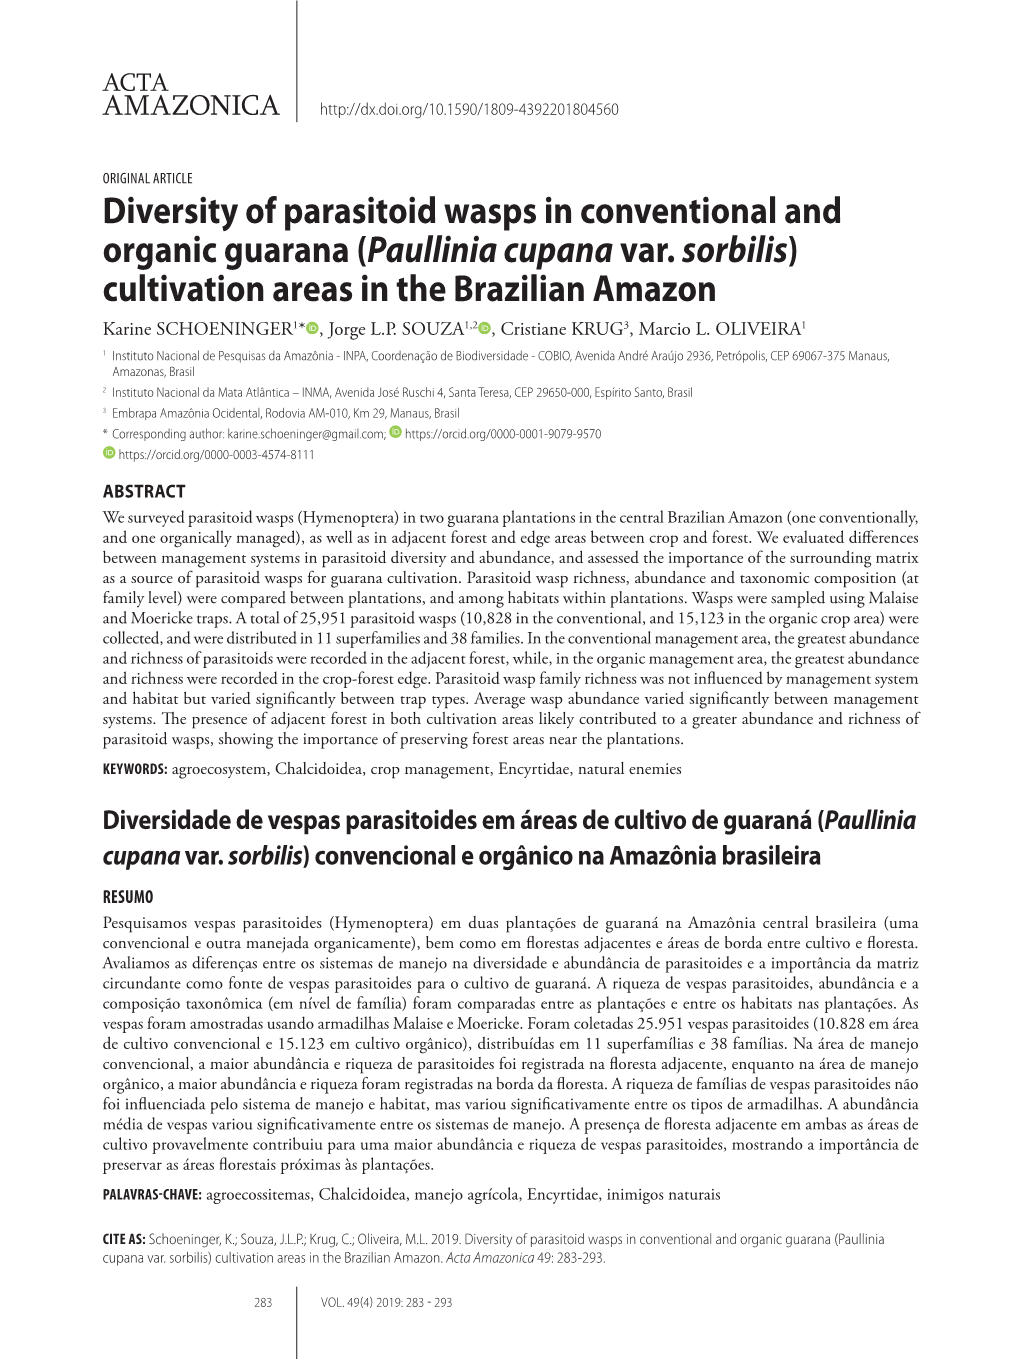 Diversity of Parasitoid Wasps in Conventional and Organic Guarana (Paullinia Cupana Var